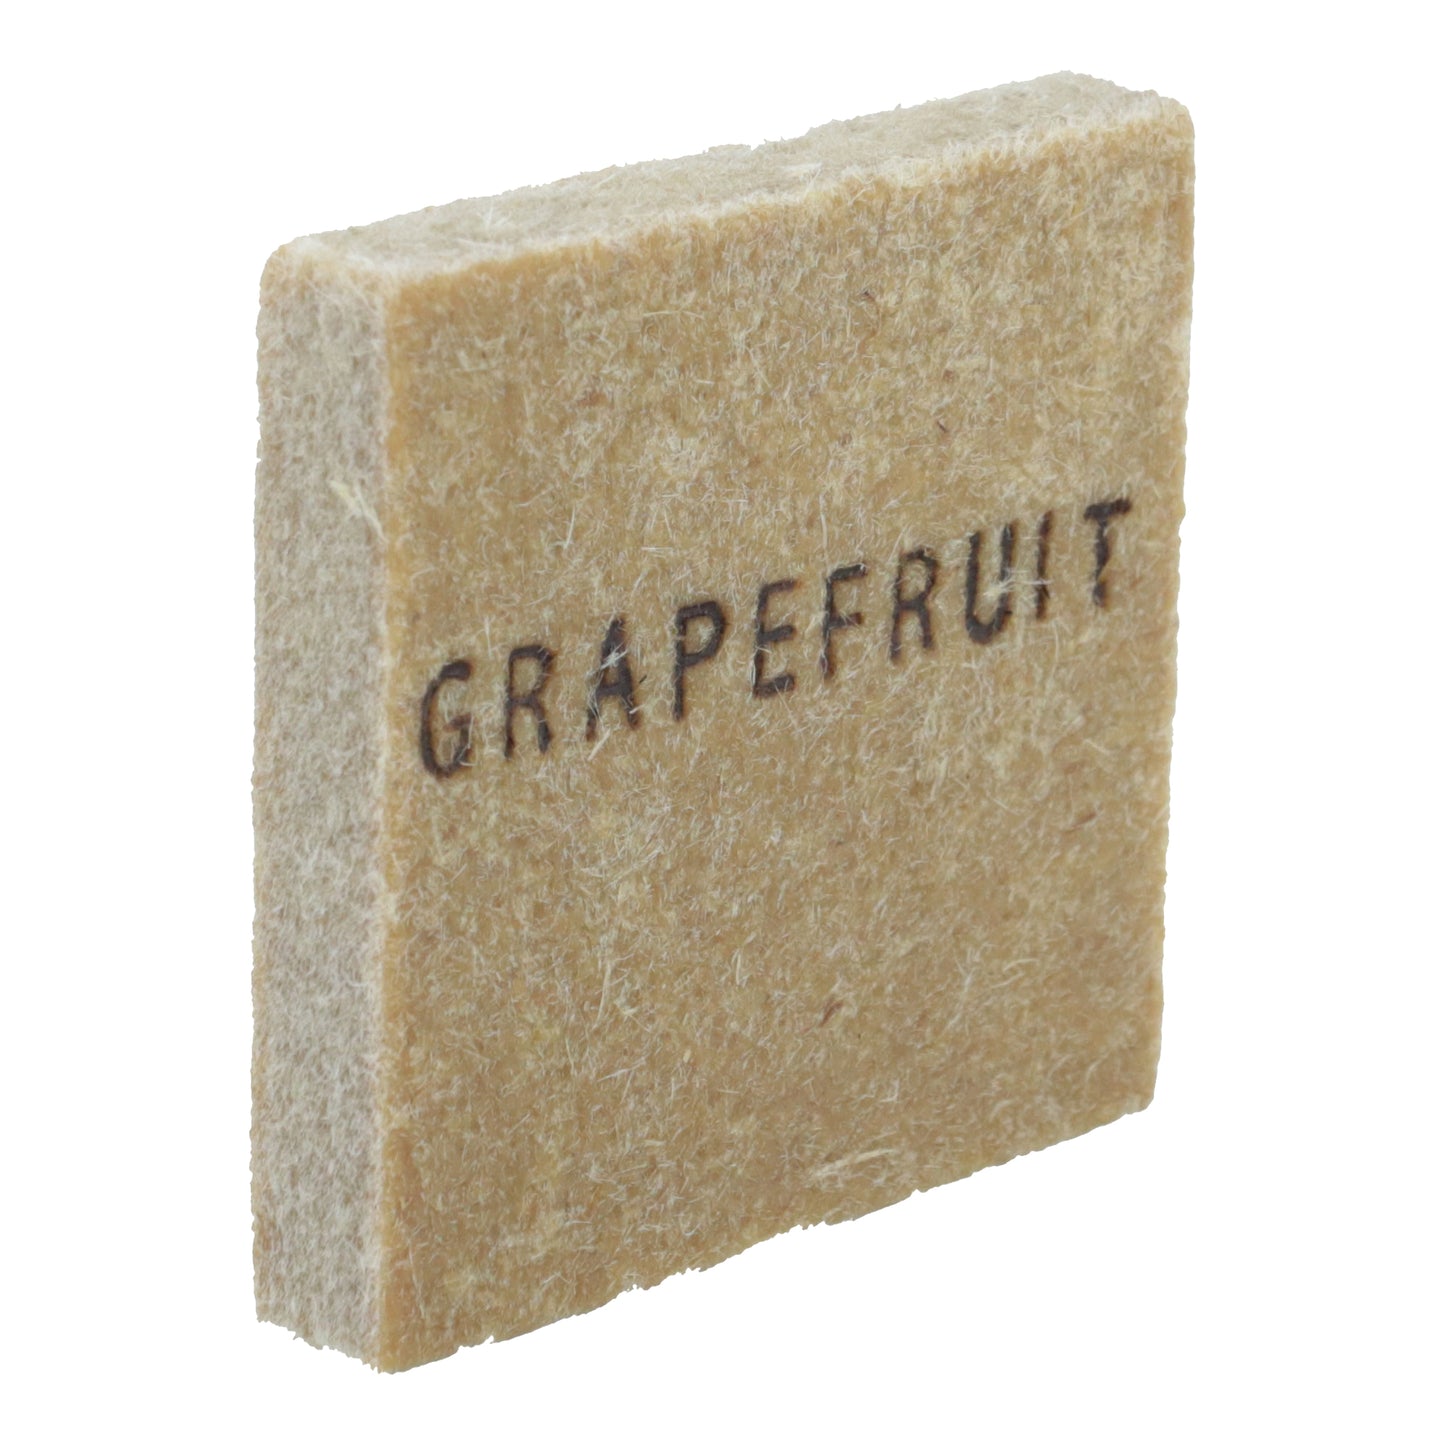 Grapefruit Wafers - 5 per bag